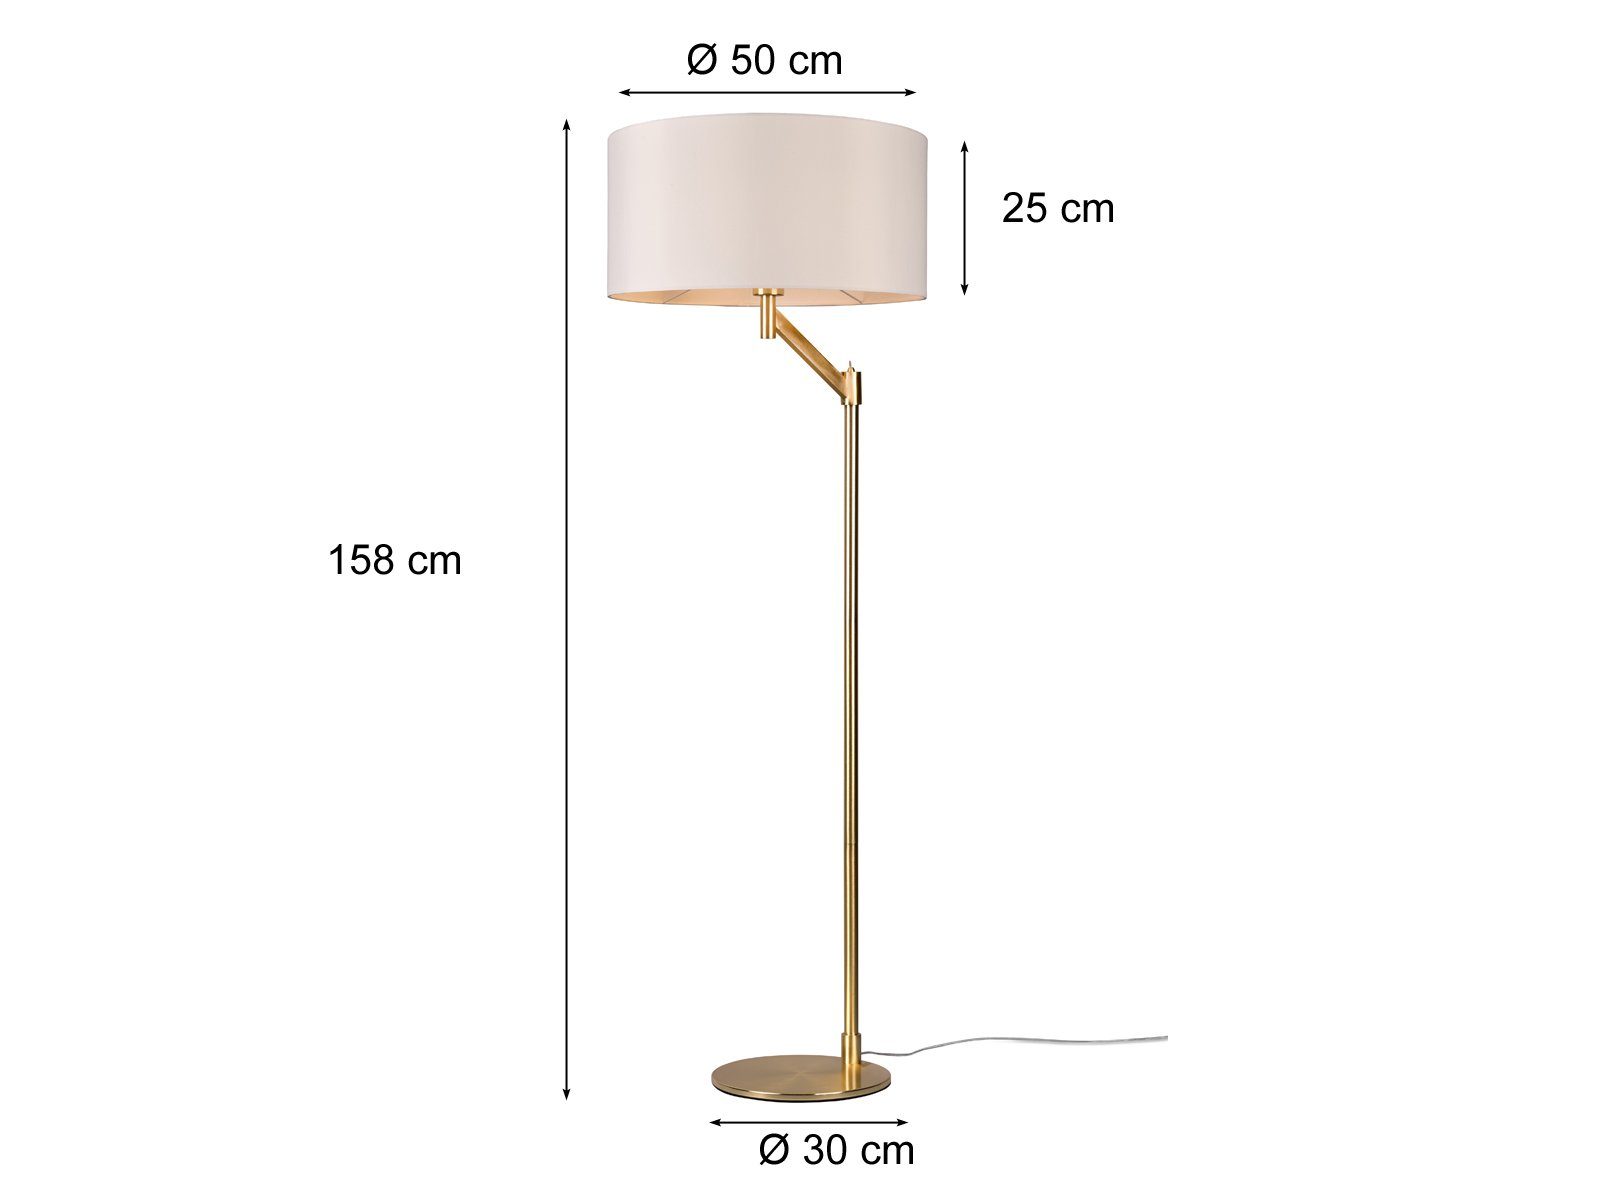 meineWunschleuchte Lampenschirm-e 158cm Stehlampe, Warmweiß, wechselbar, / LED Bauhaus Messing groß, LED Gold-en Stoff Höhe matt Design-klassiker Weiß